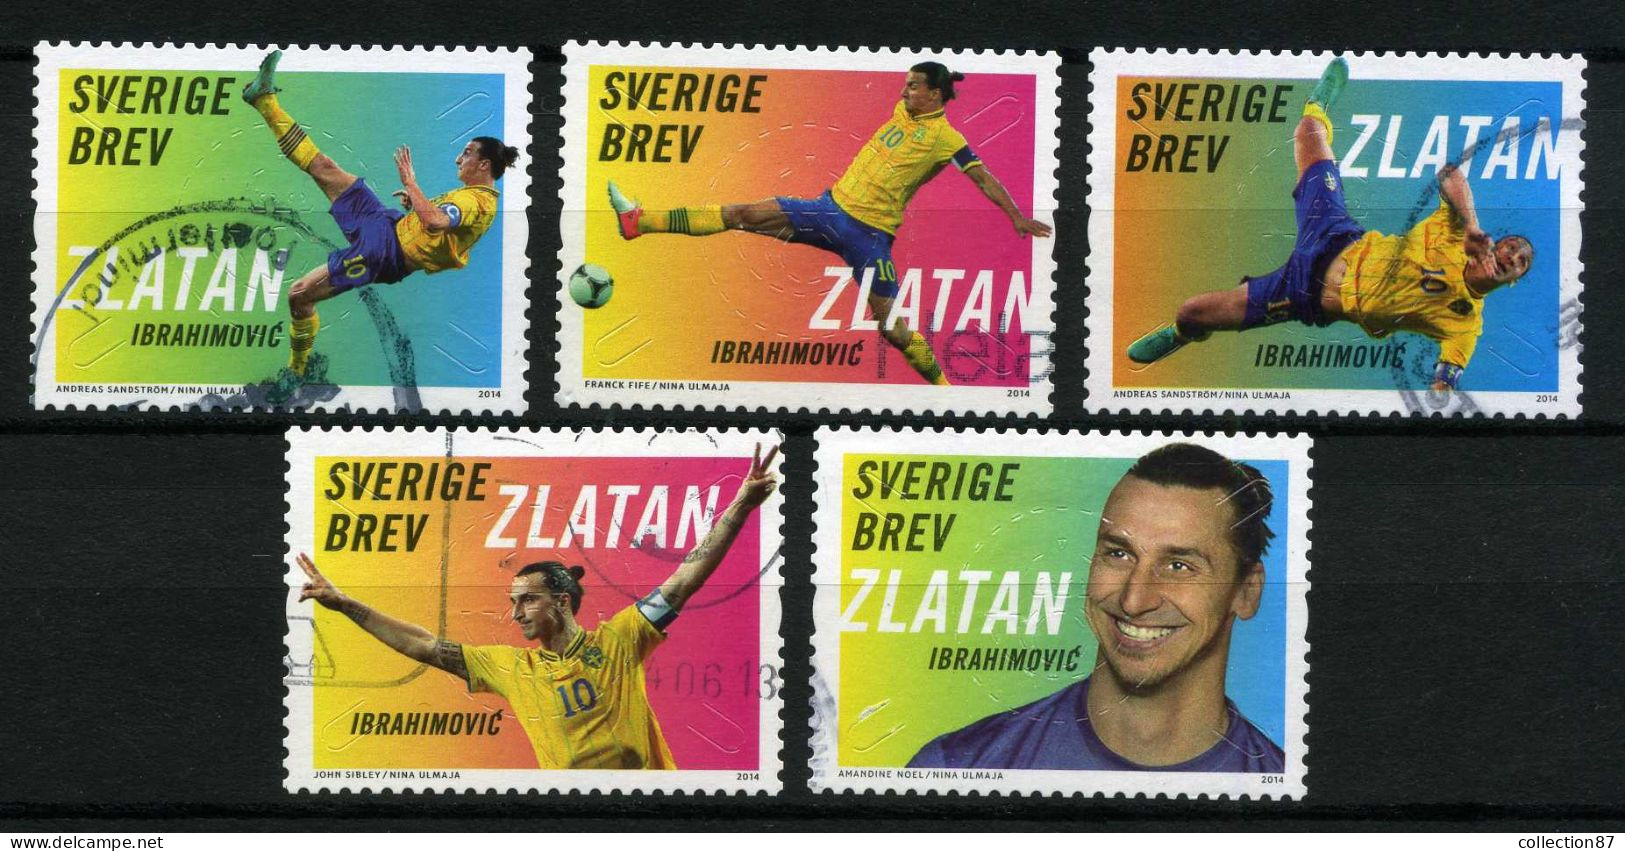 Réf 77 < -- SWEDEN 2014 < Yvert N° 2961 à 2965 Ø Used -- > Football Zlatan Ibrahinovic Foot Footballeur - Soccer - Used Stamps